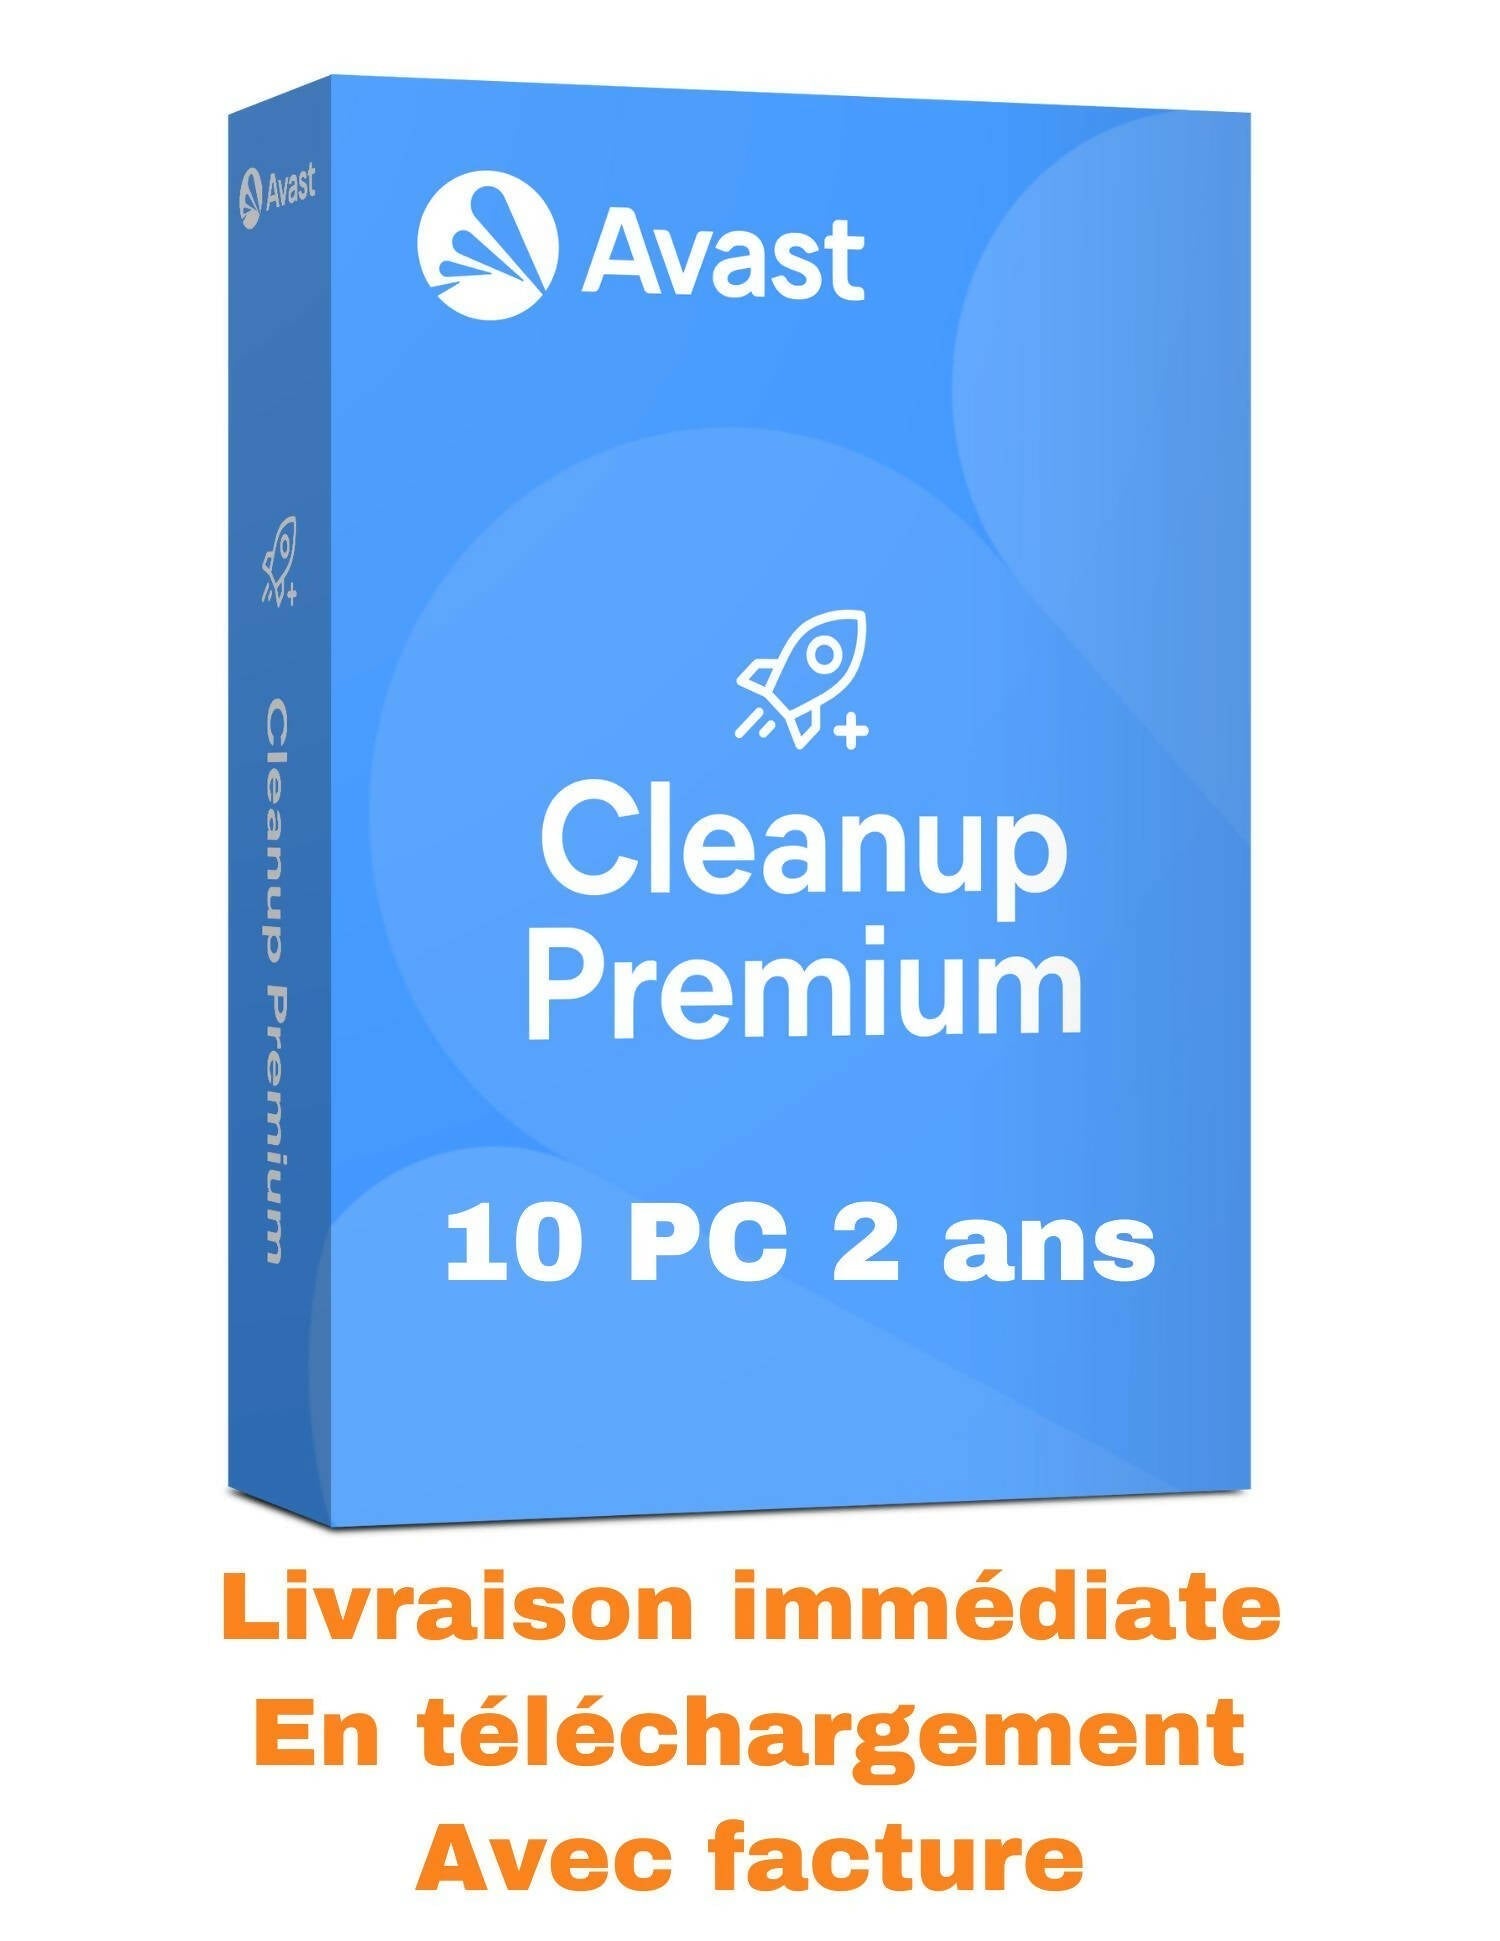 Avast Cleanup Premium 10 Appareils 2 ans clicktofournisseur.com